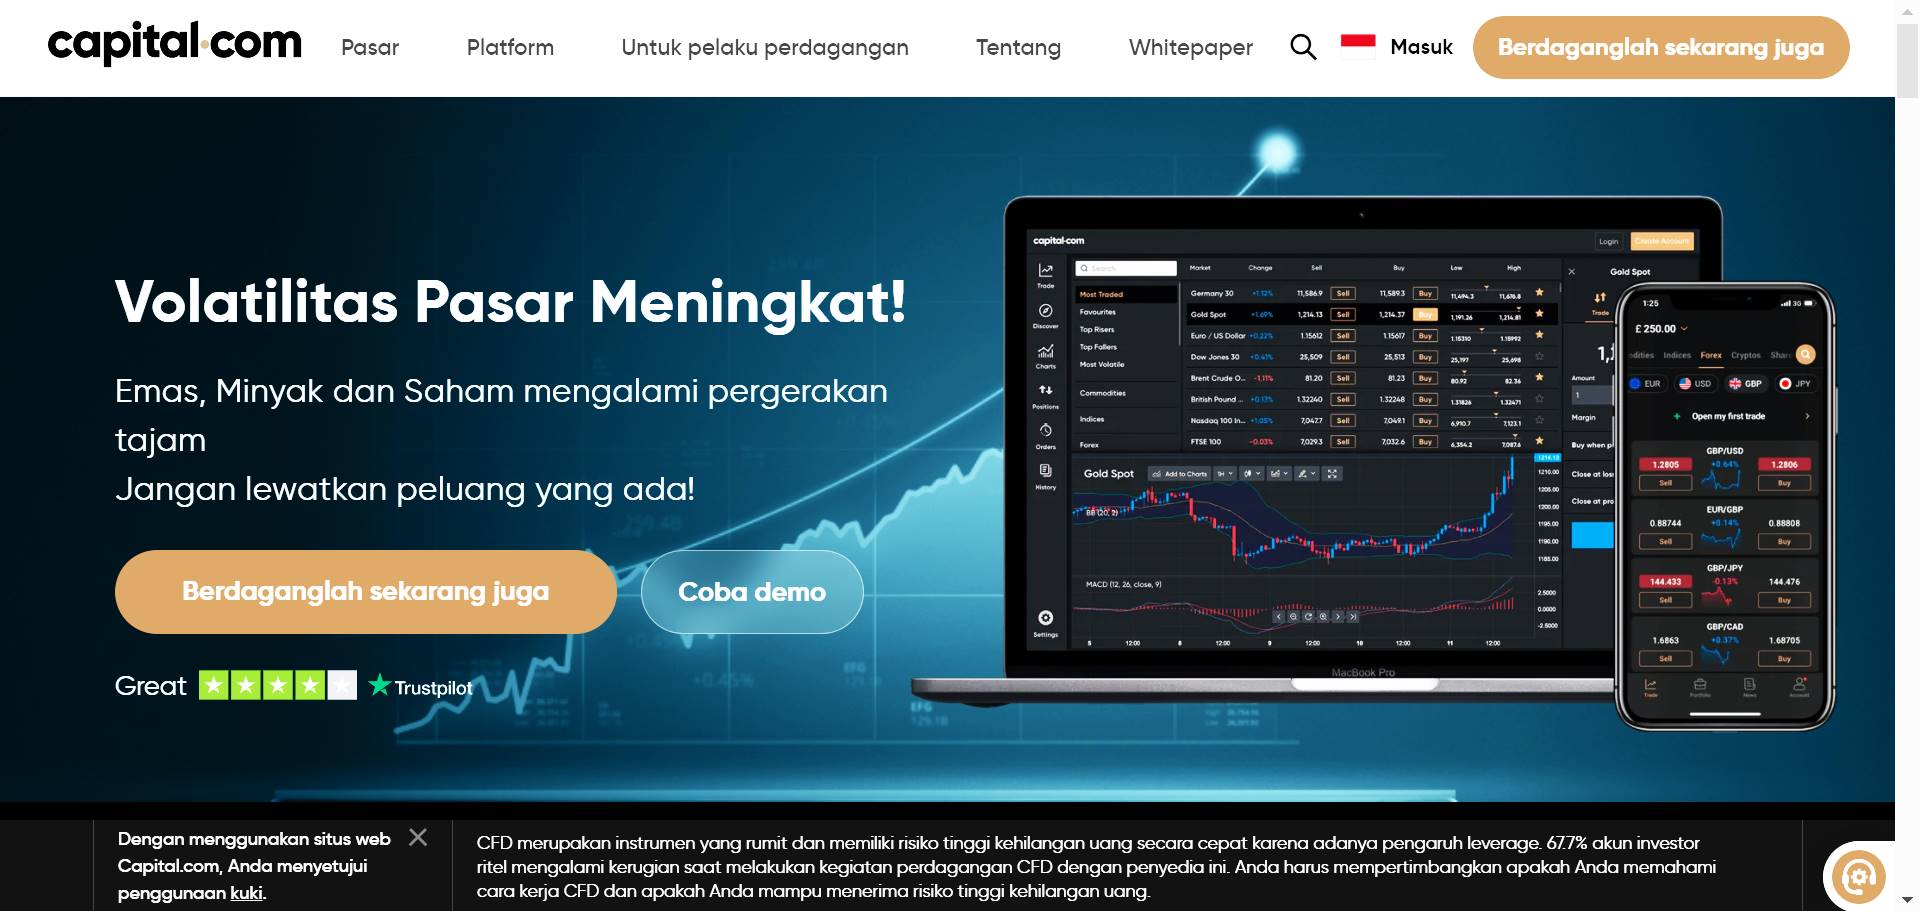 gambar platform web Capital com